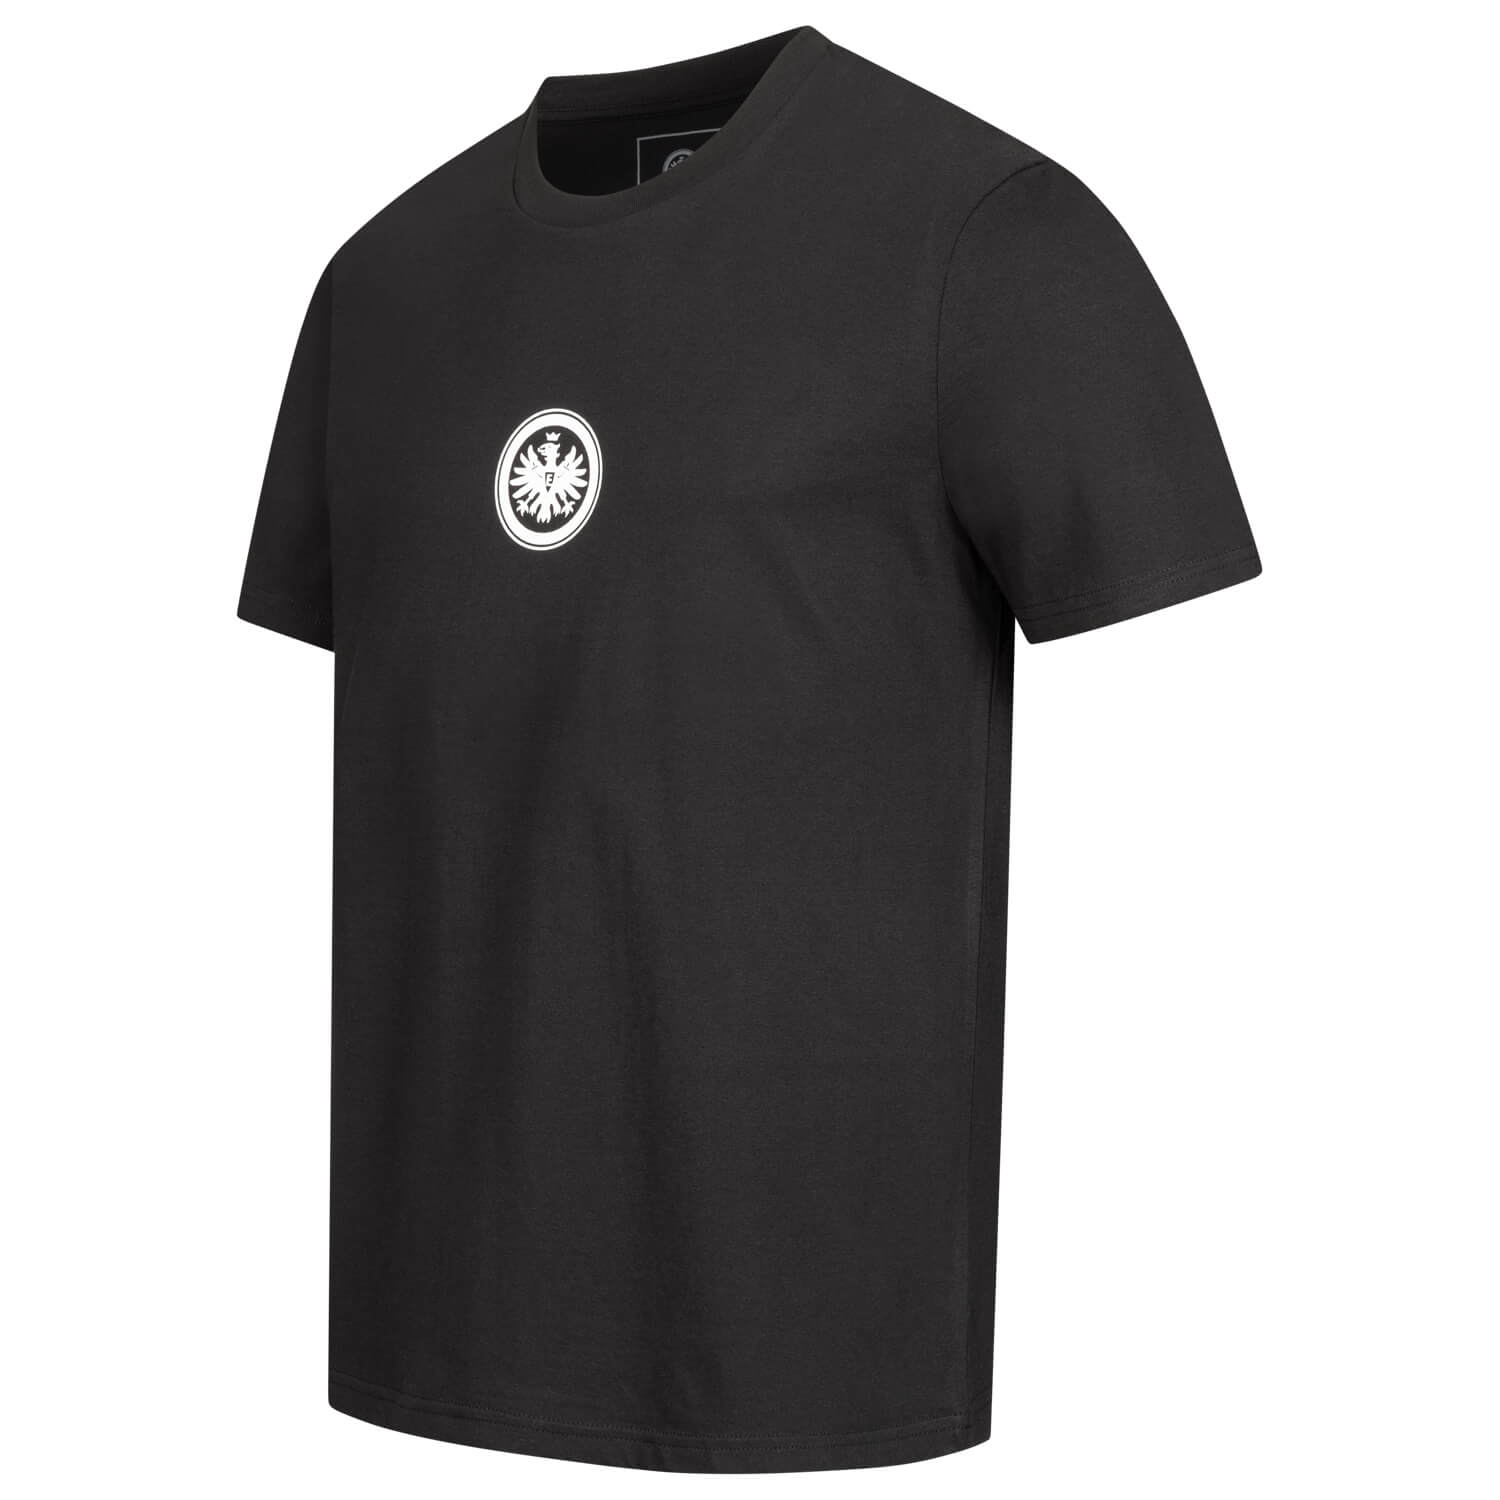 Bild 3: T-Shirt One Club Black